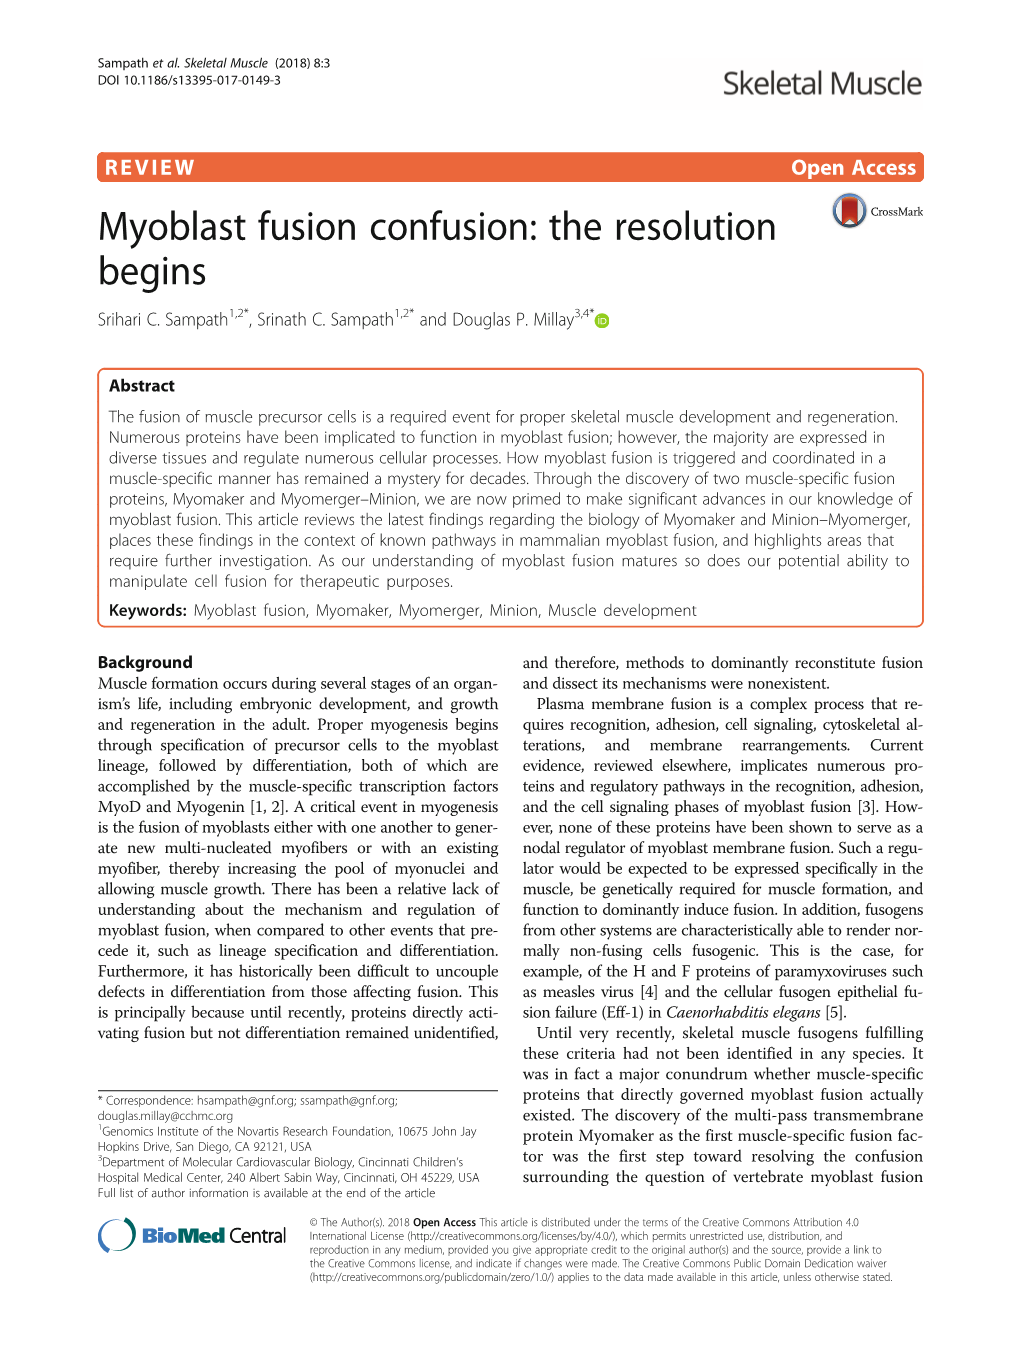 Myoblast Fusion Confusion: the Resolution Begins Srihari C